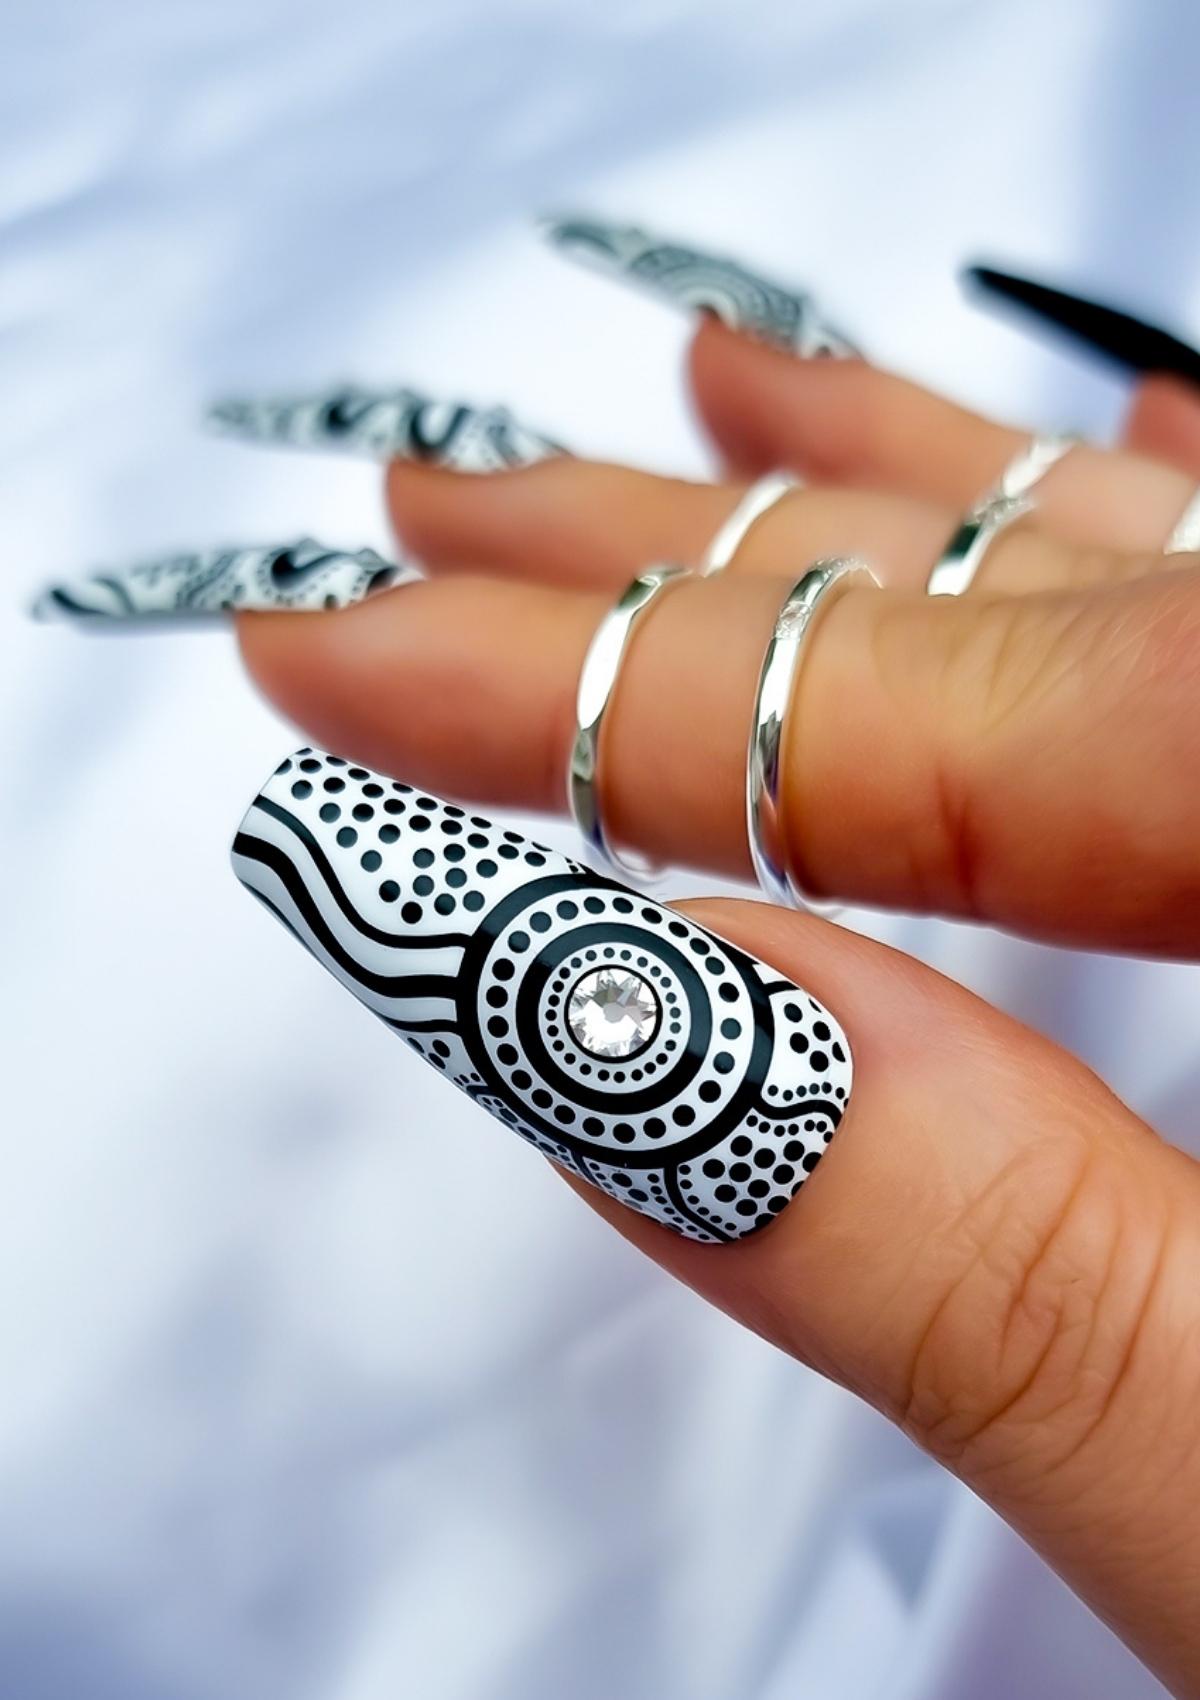 Black and white Aboriginal Australian nail art design